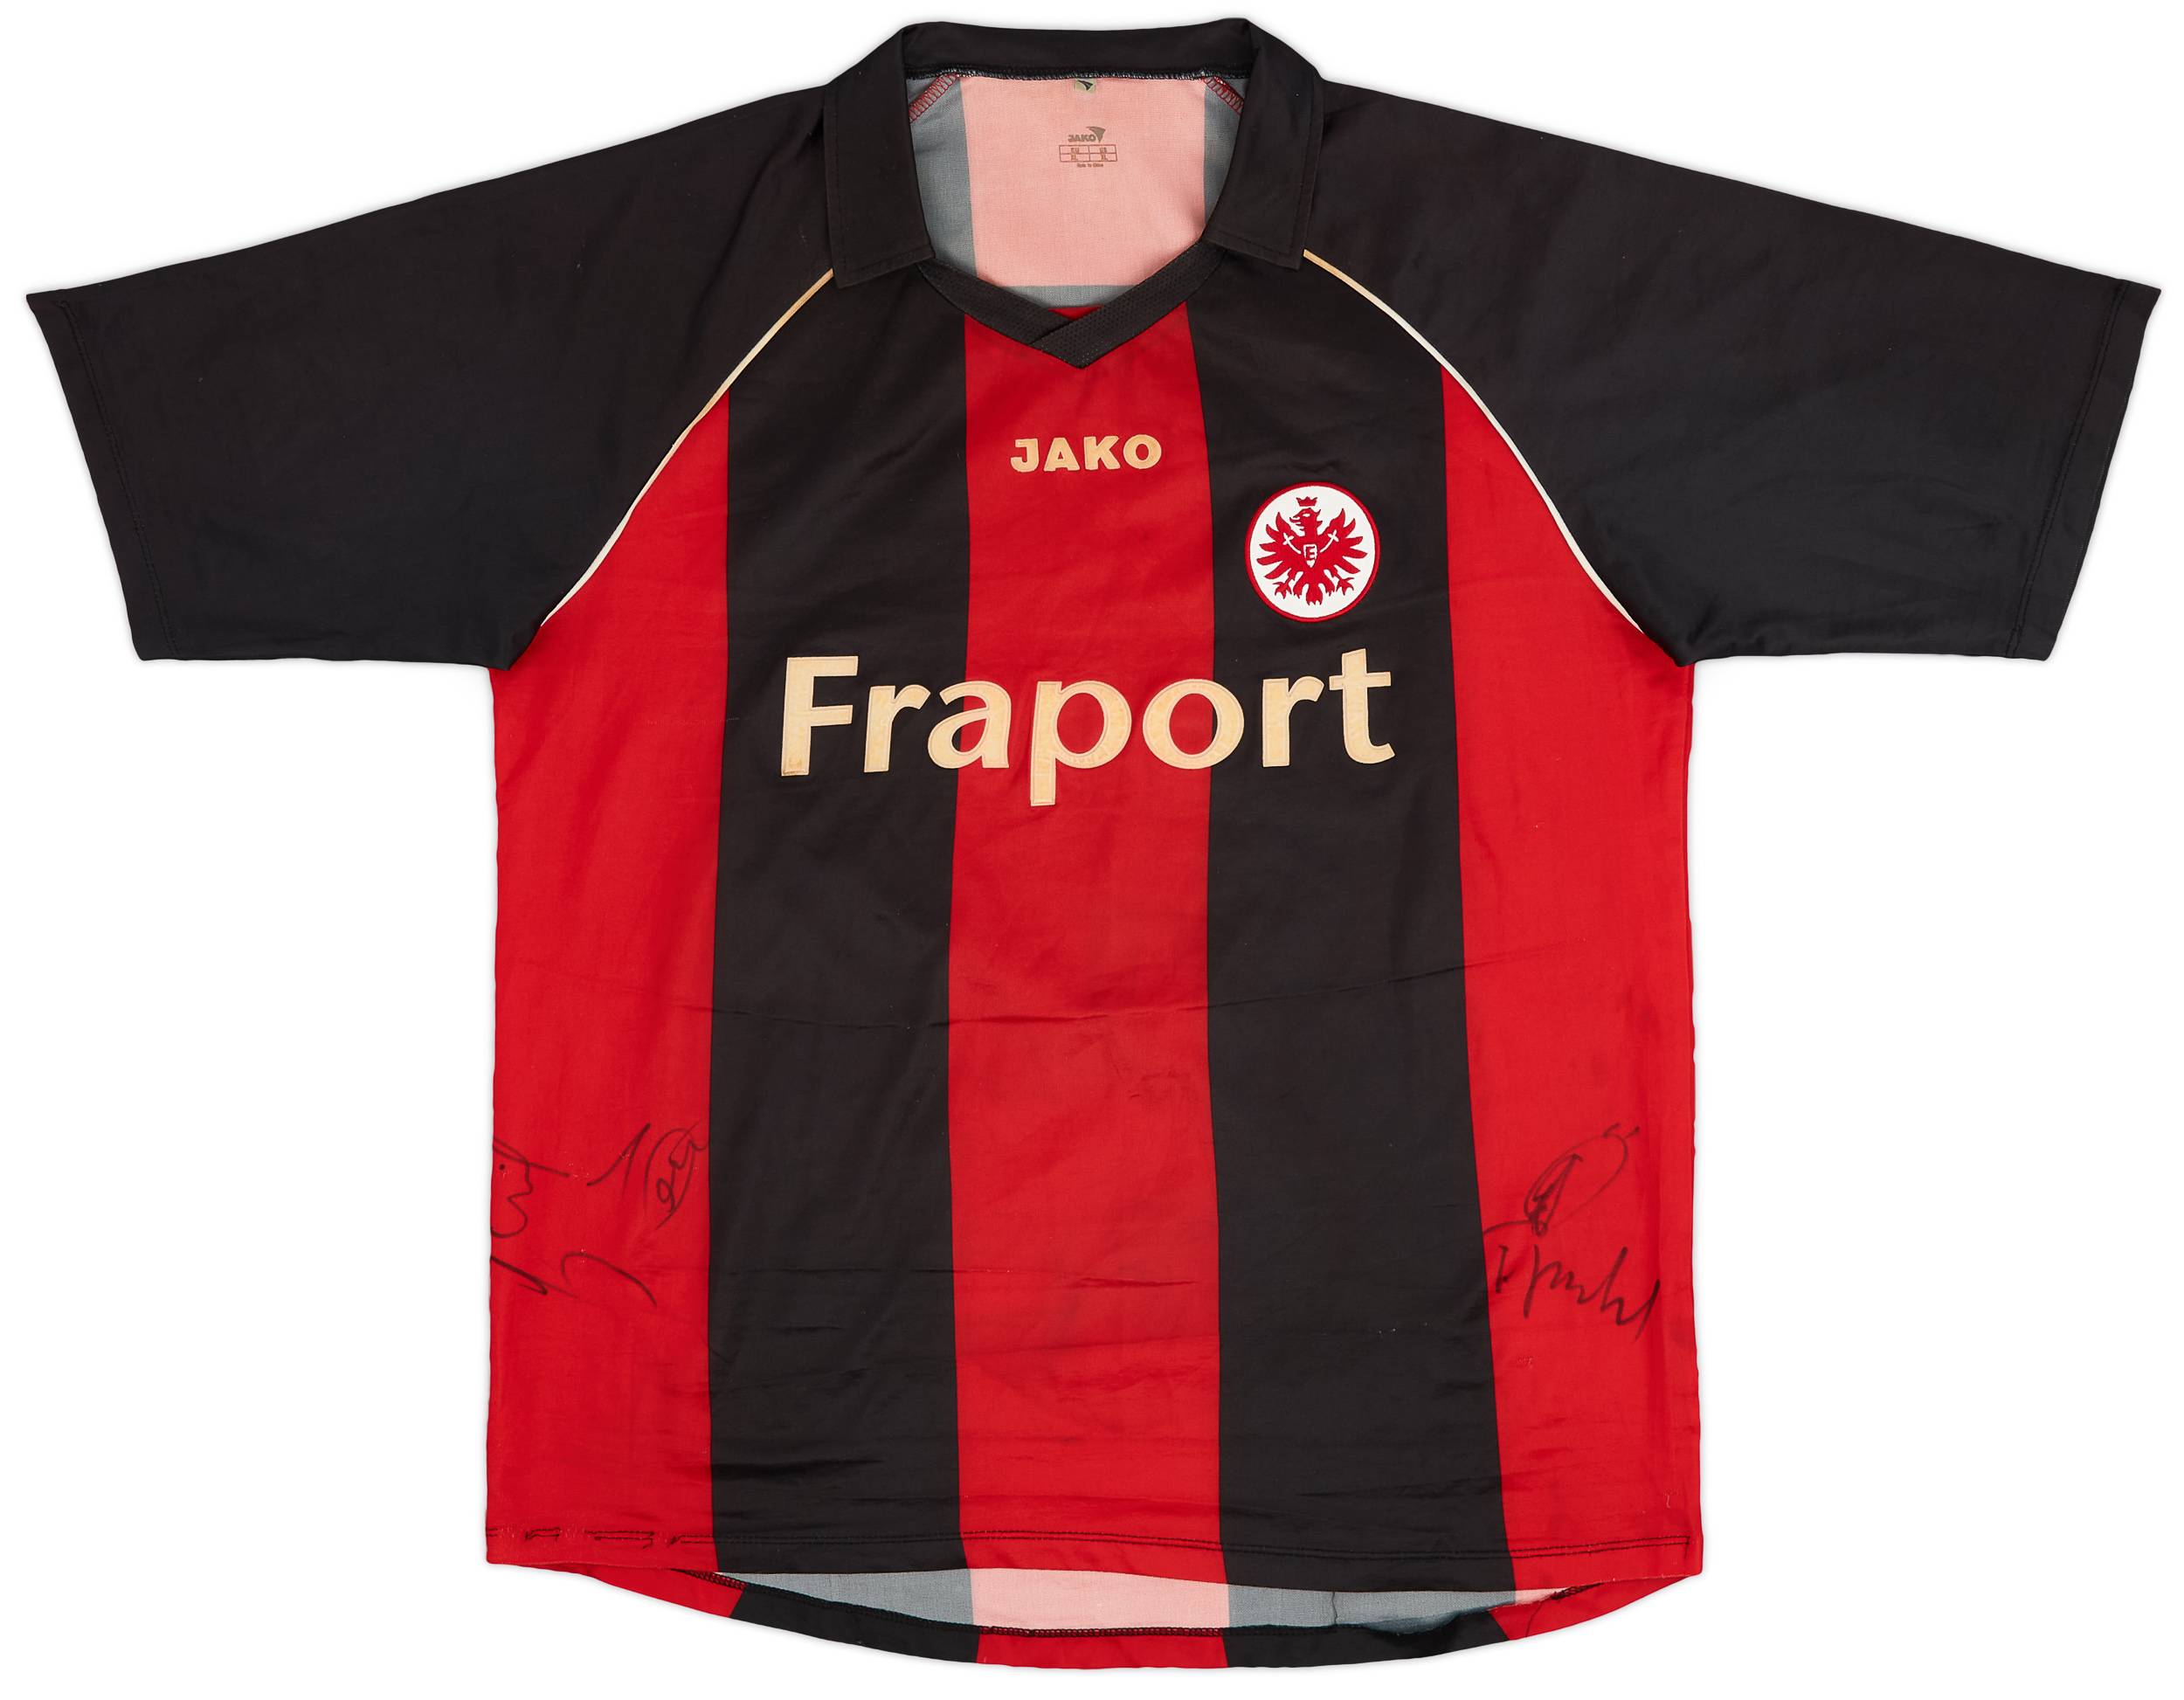 2006-07 Eintracht Frankfurt Signed Home Shirt - 5/10 - (XL)